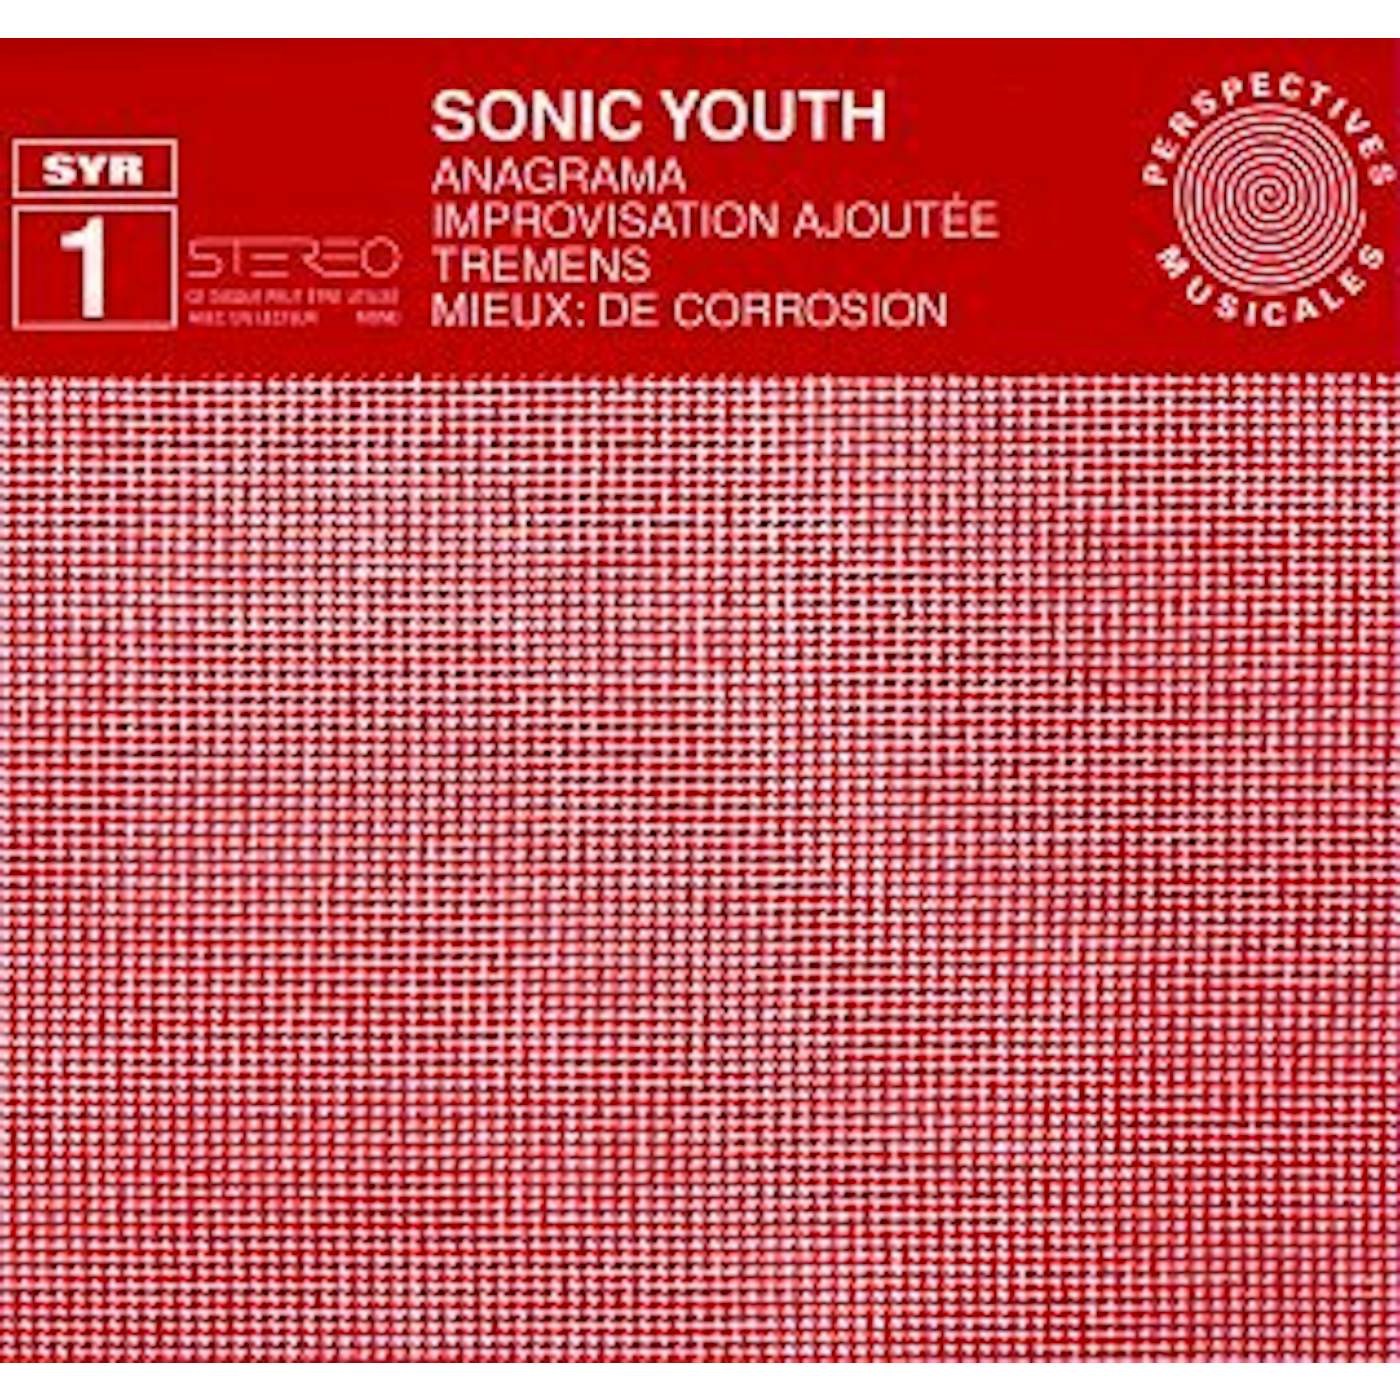 Sonic Youth ANAGRAMA CD